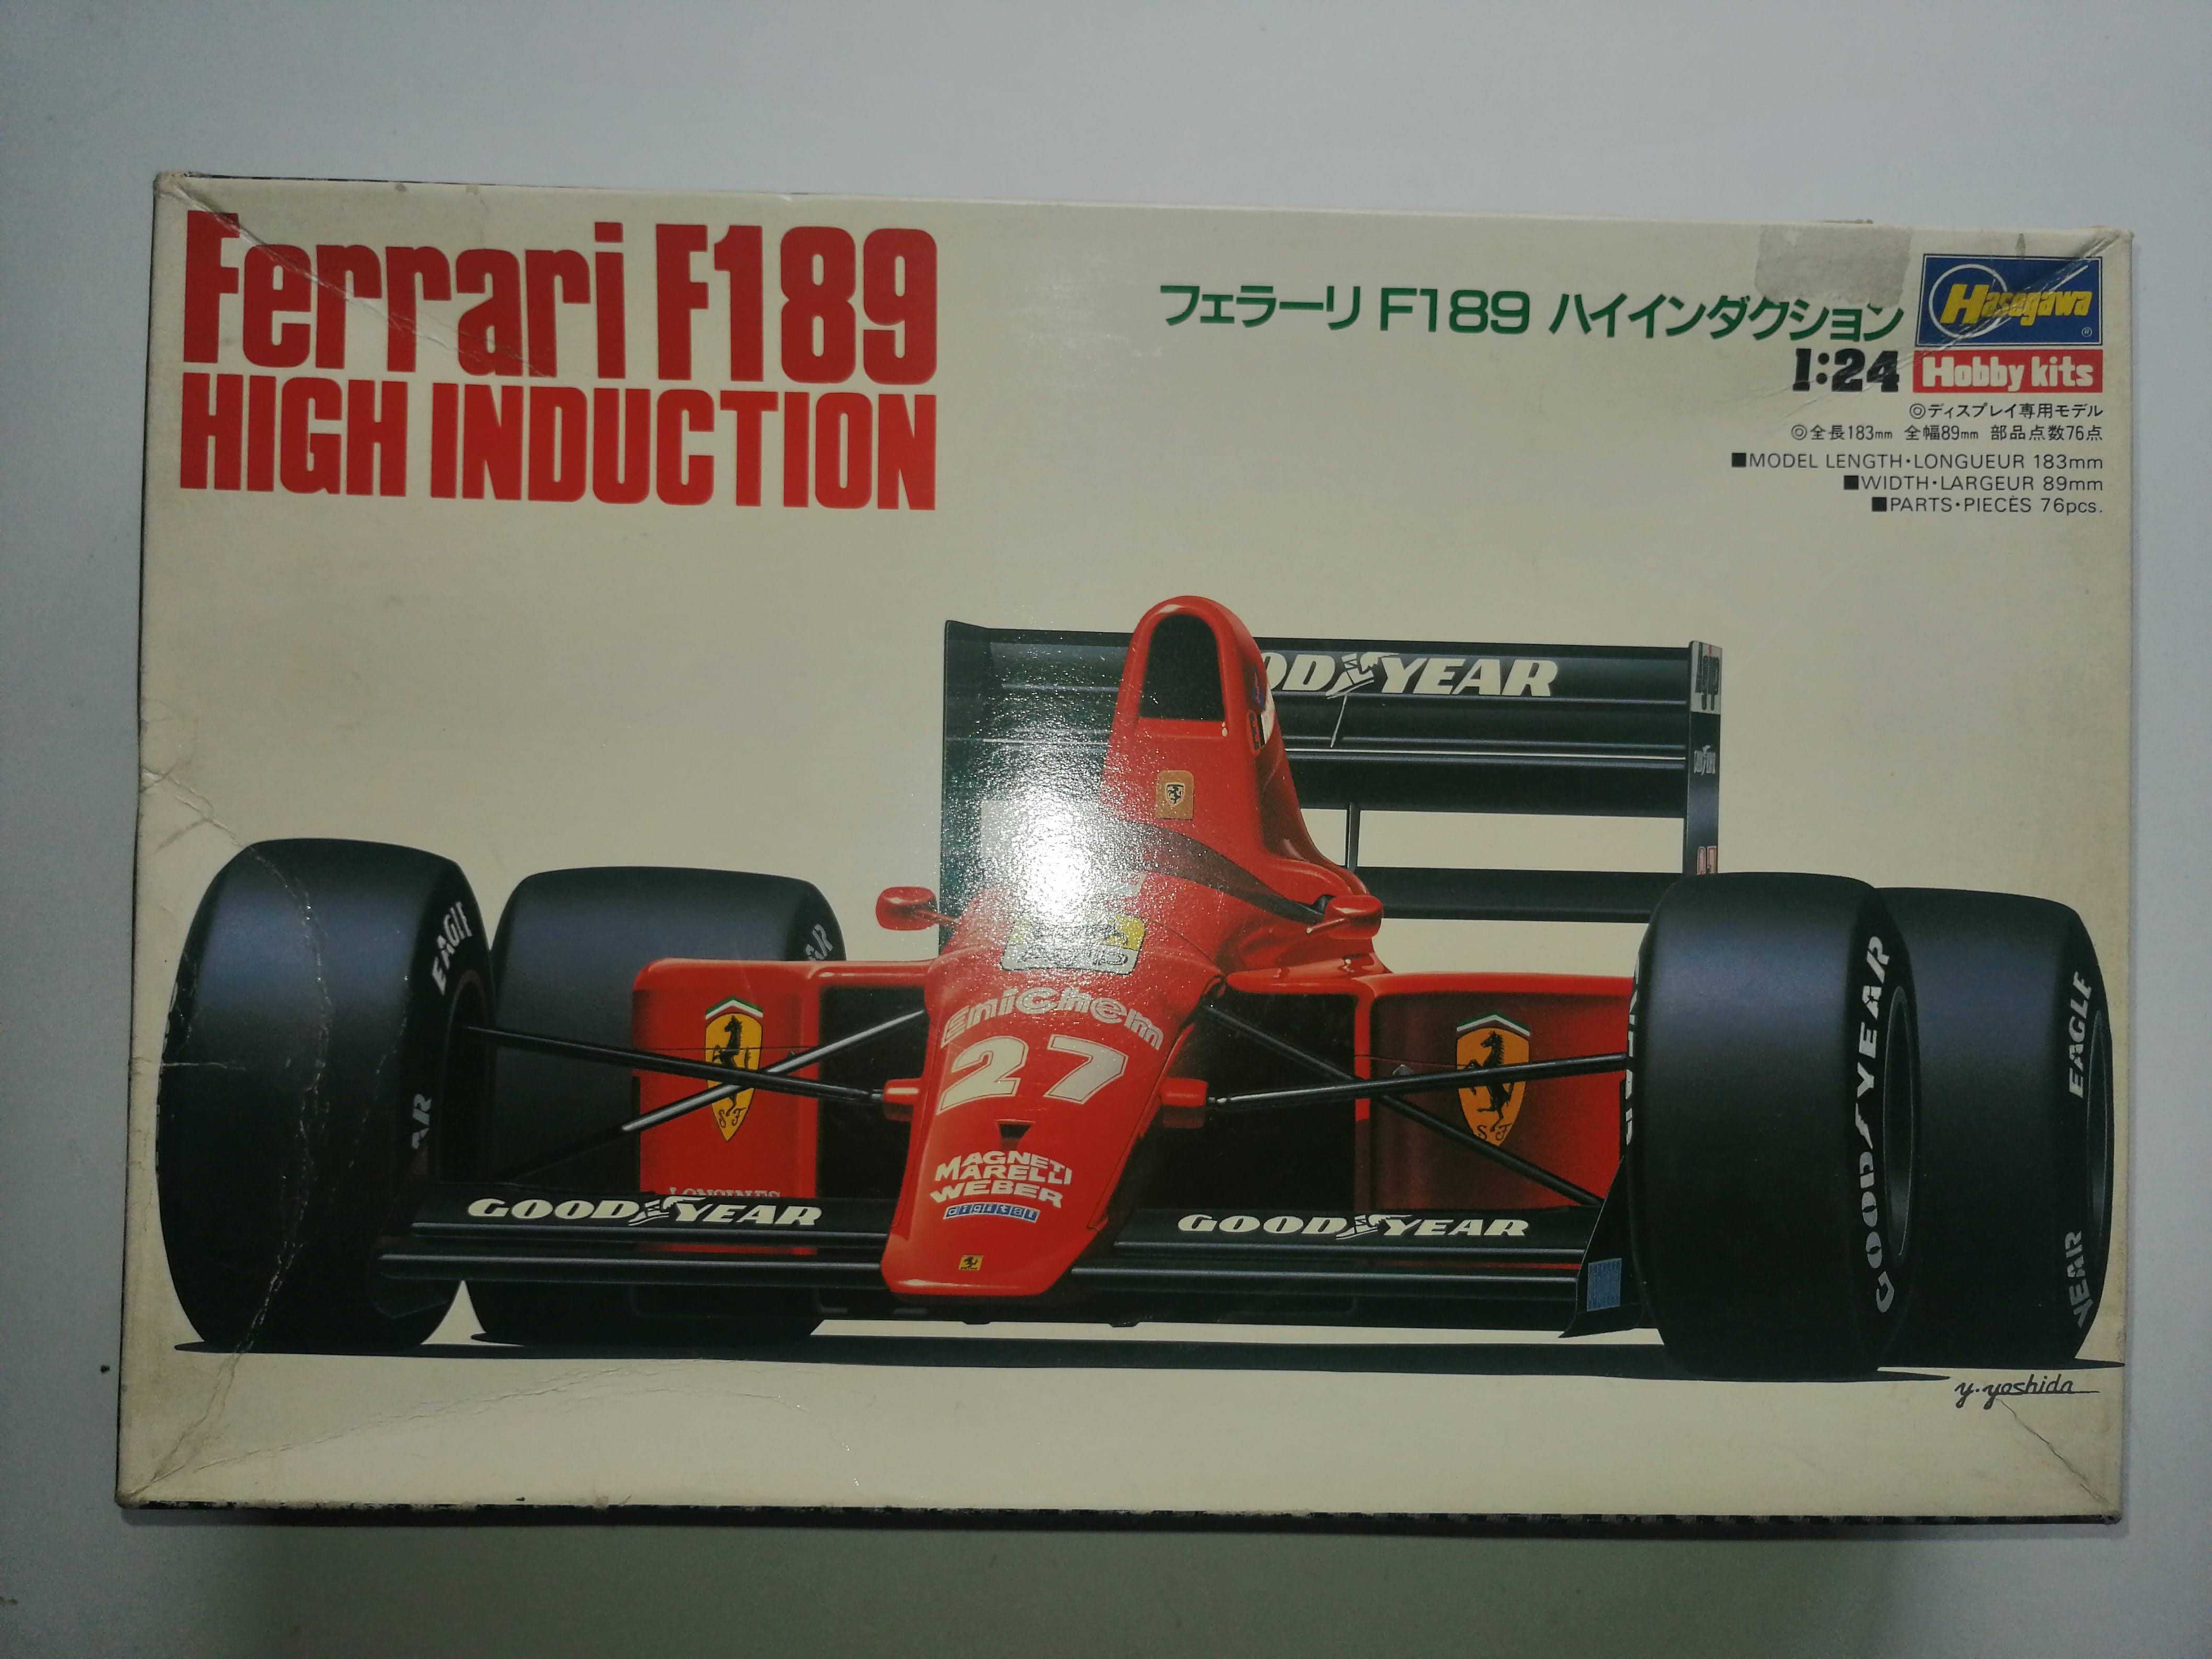 Ferrari F189 - Formula 1 - 1:24 - Hasegawa